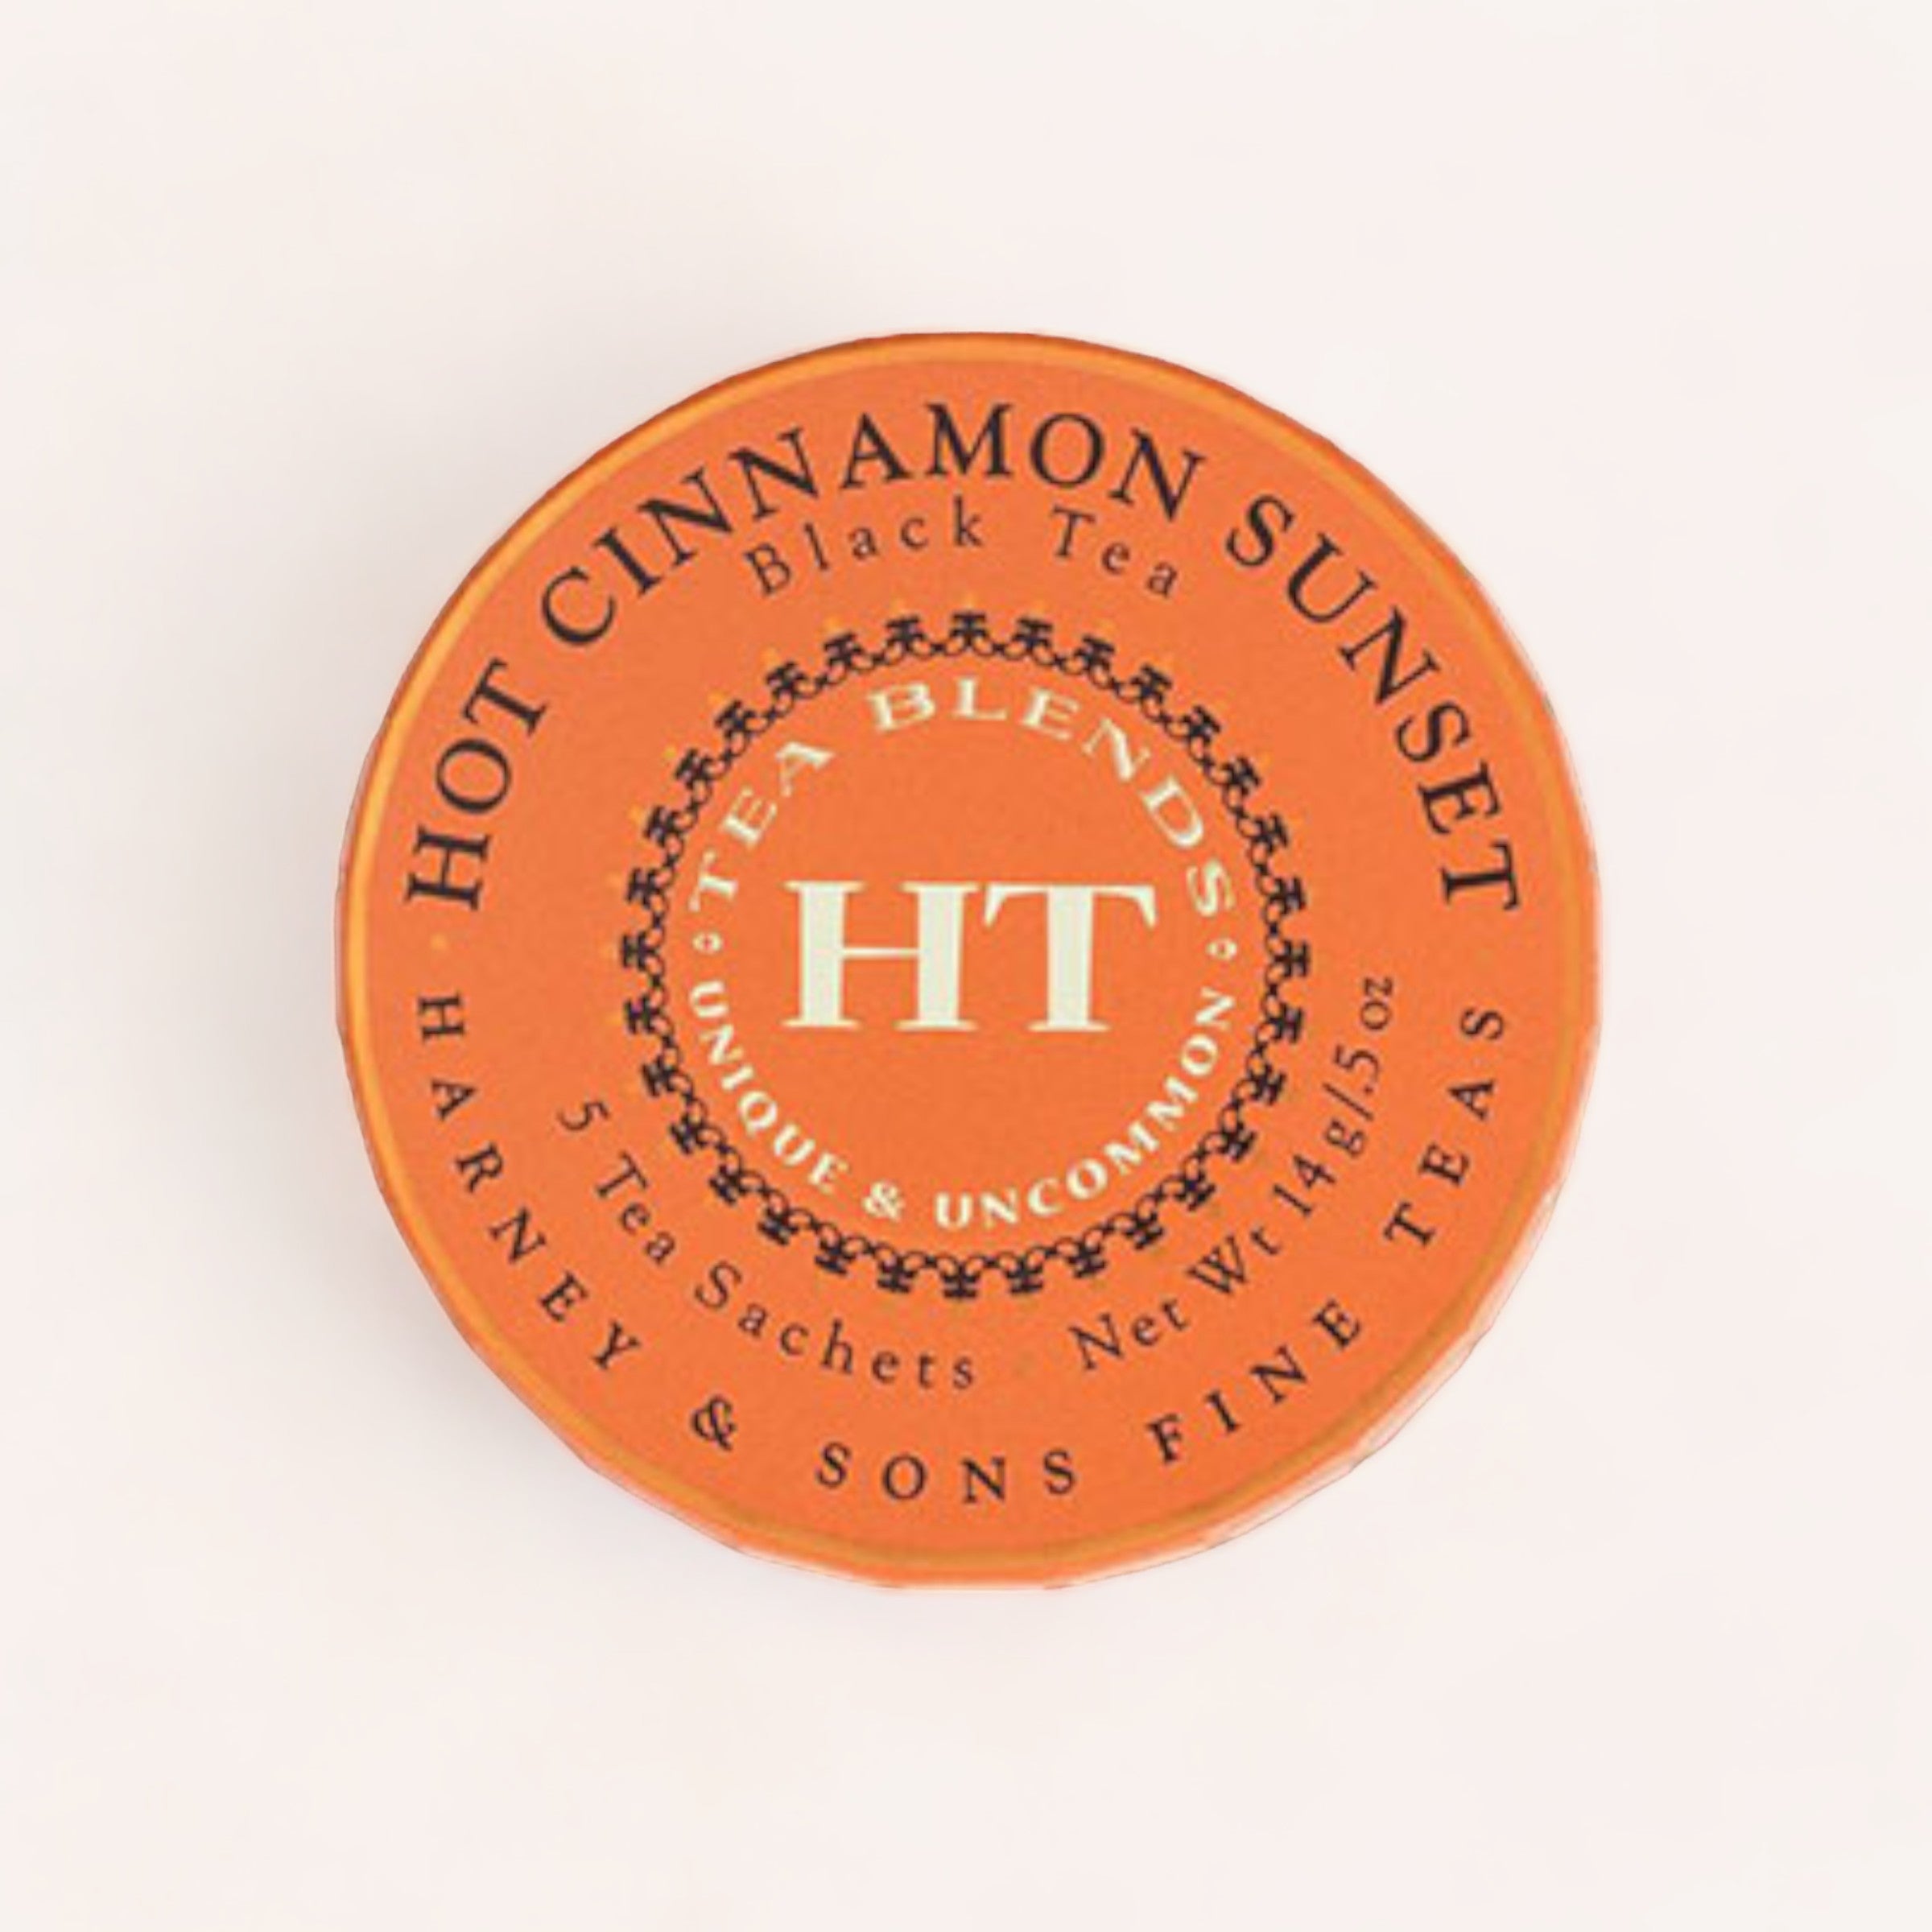 hot cinnamon sunset tea by harney & sons